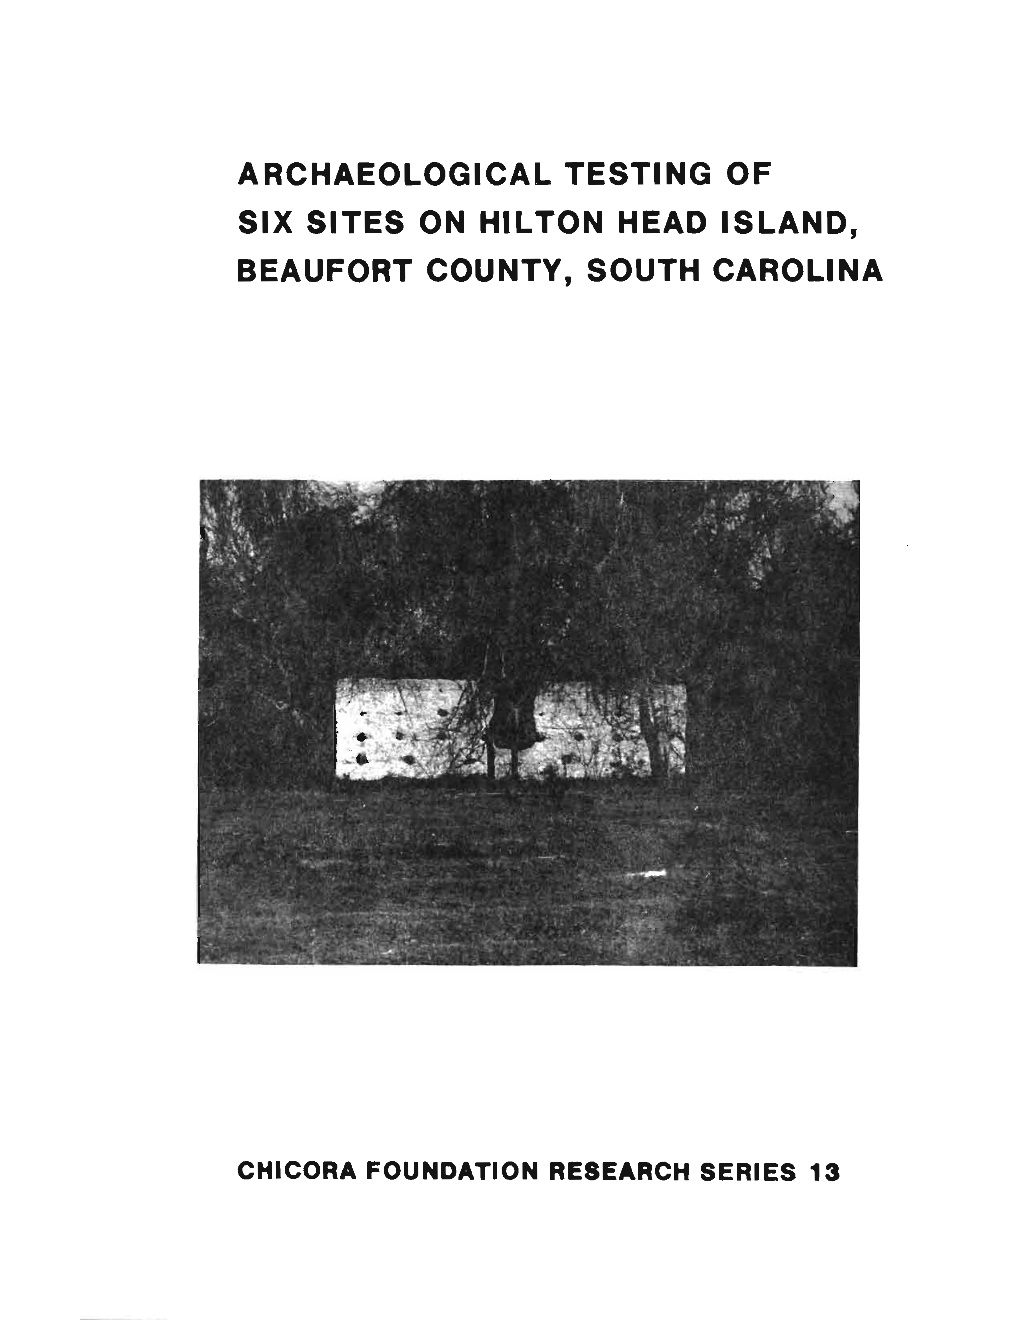 Archaeological Testing of Six Sites on Hilton Head Island, Beaufort County, South Carolina